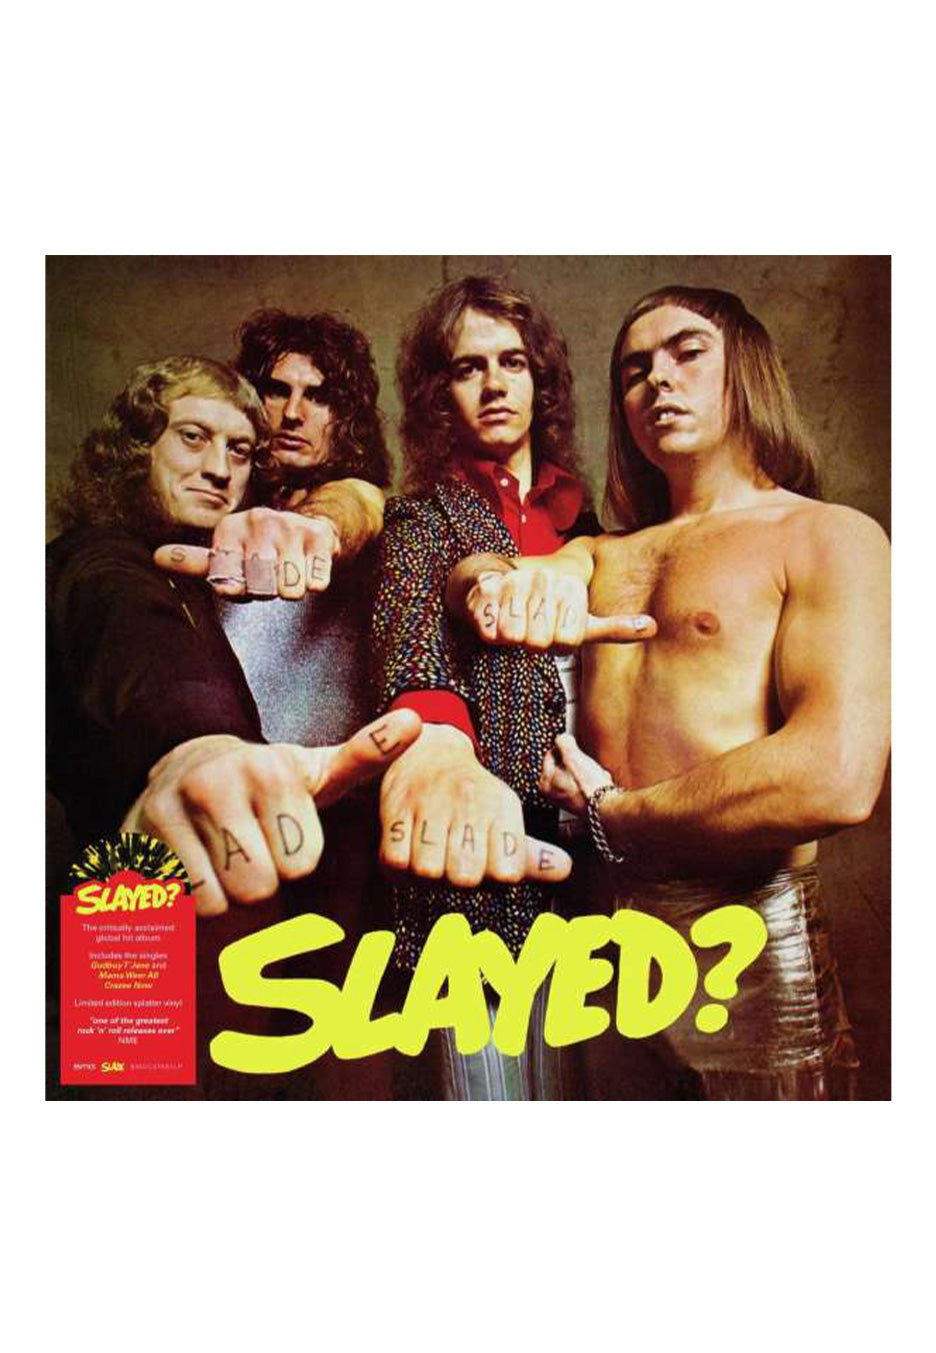 Slade - Slayed? Ltd. Black/Yellow - Splattered Vinyl